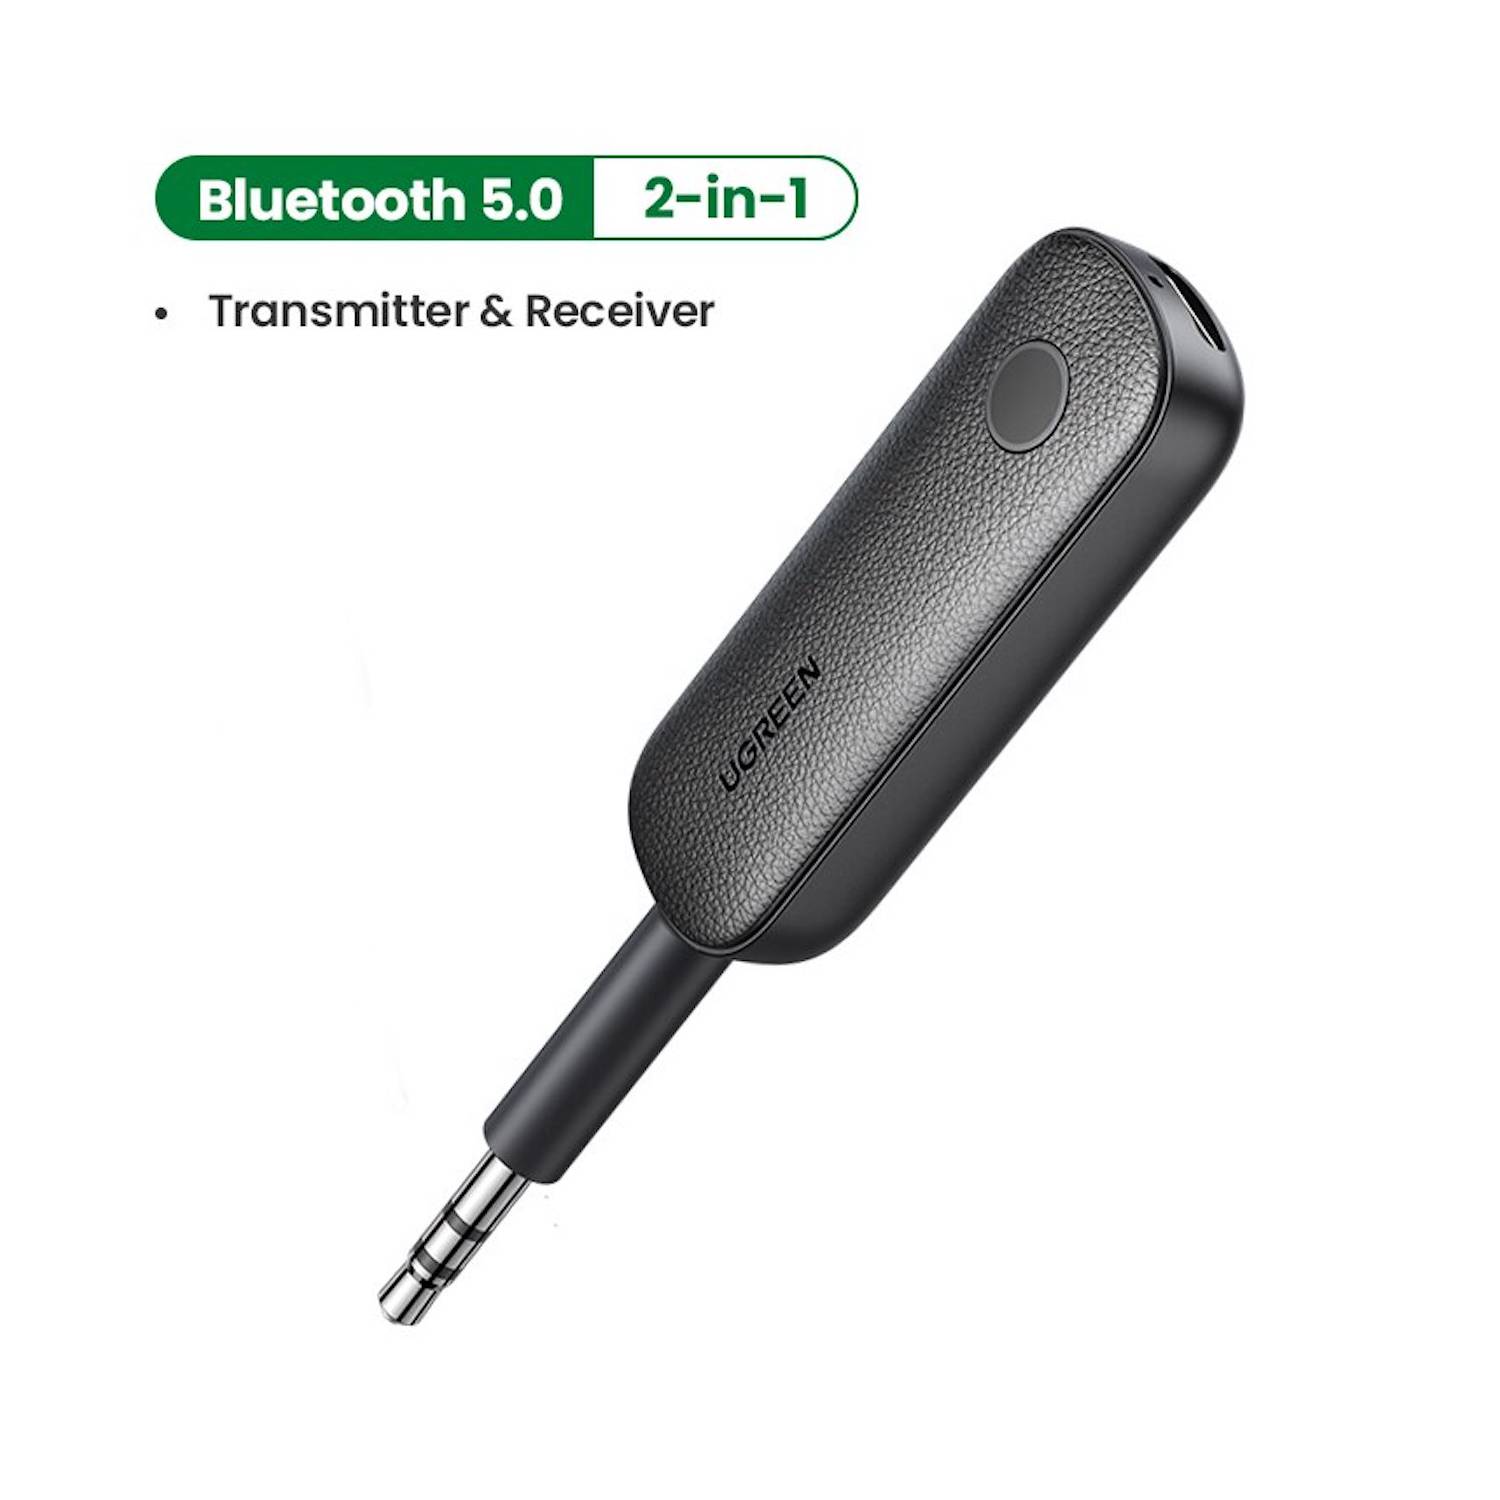 Transmisor Receptor Bluetooth 5.0, 2 en 1, Adaptador con Jack 3